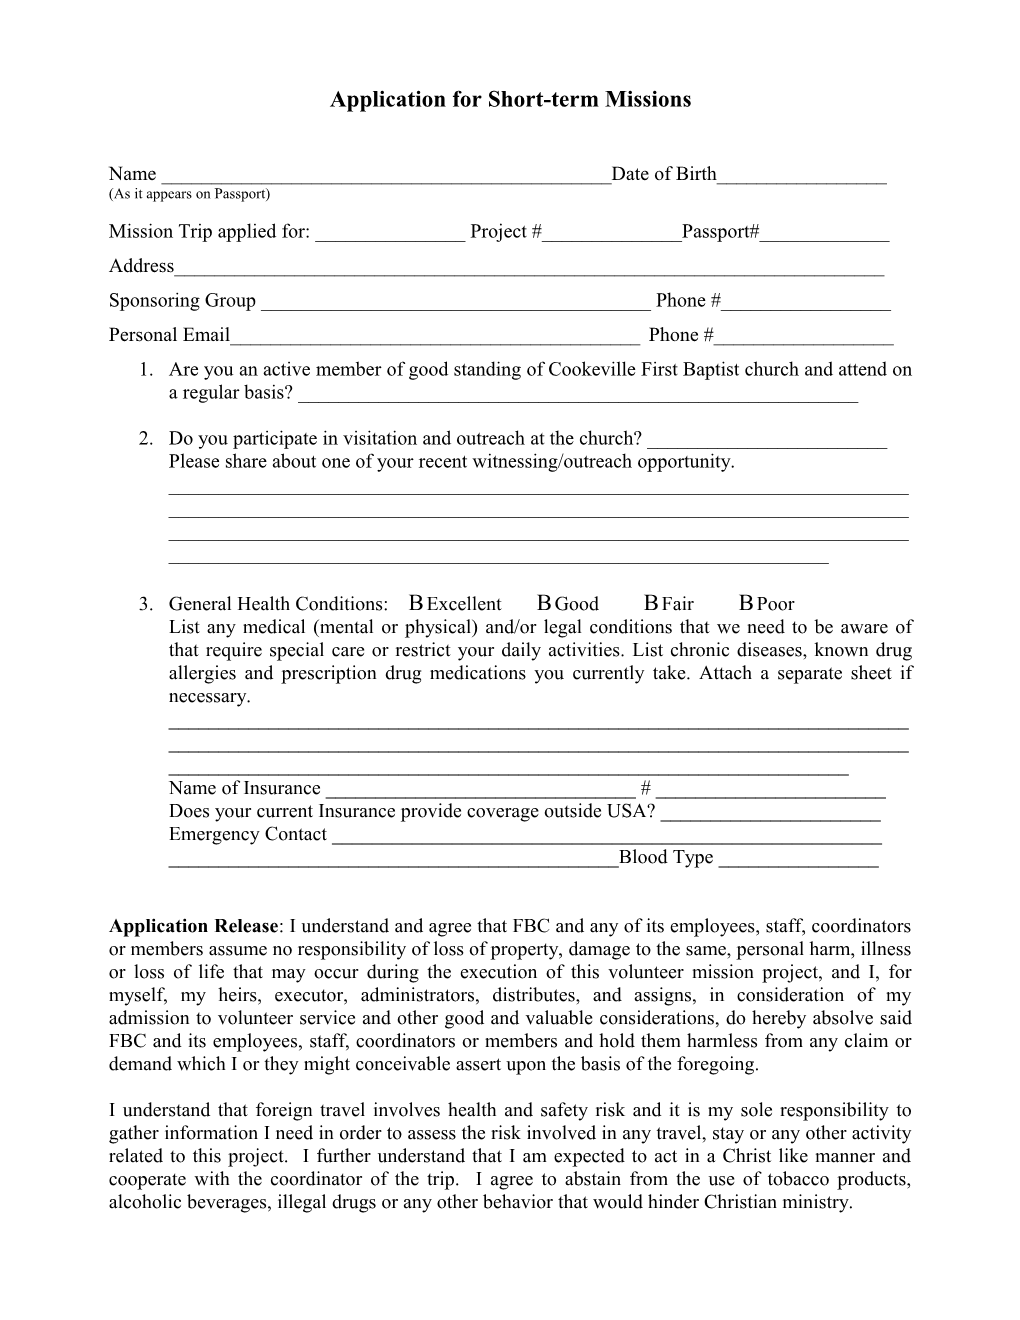 Application for International Short-Term Mission Scholarship